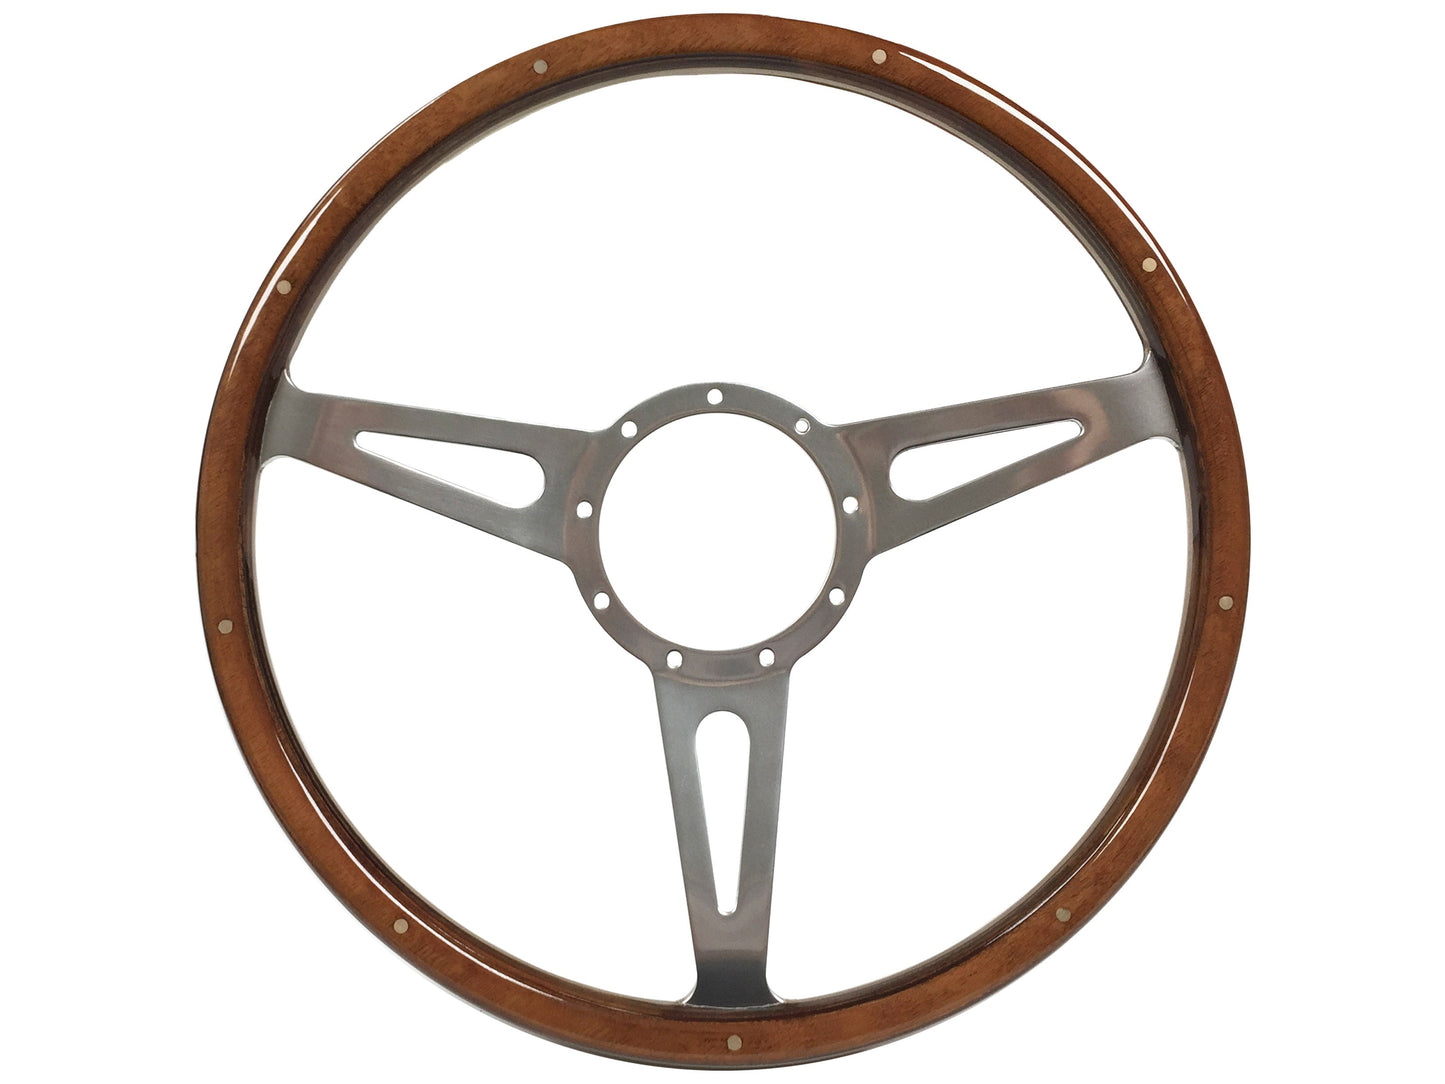 1968-78 Ford Fairlane Steering Wheel Kit | Deluxe Walnut Wood | ST3053